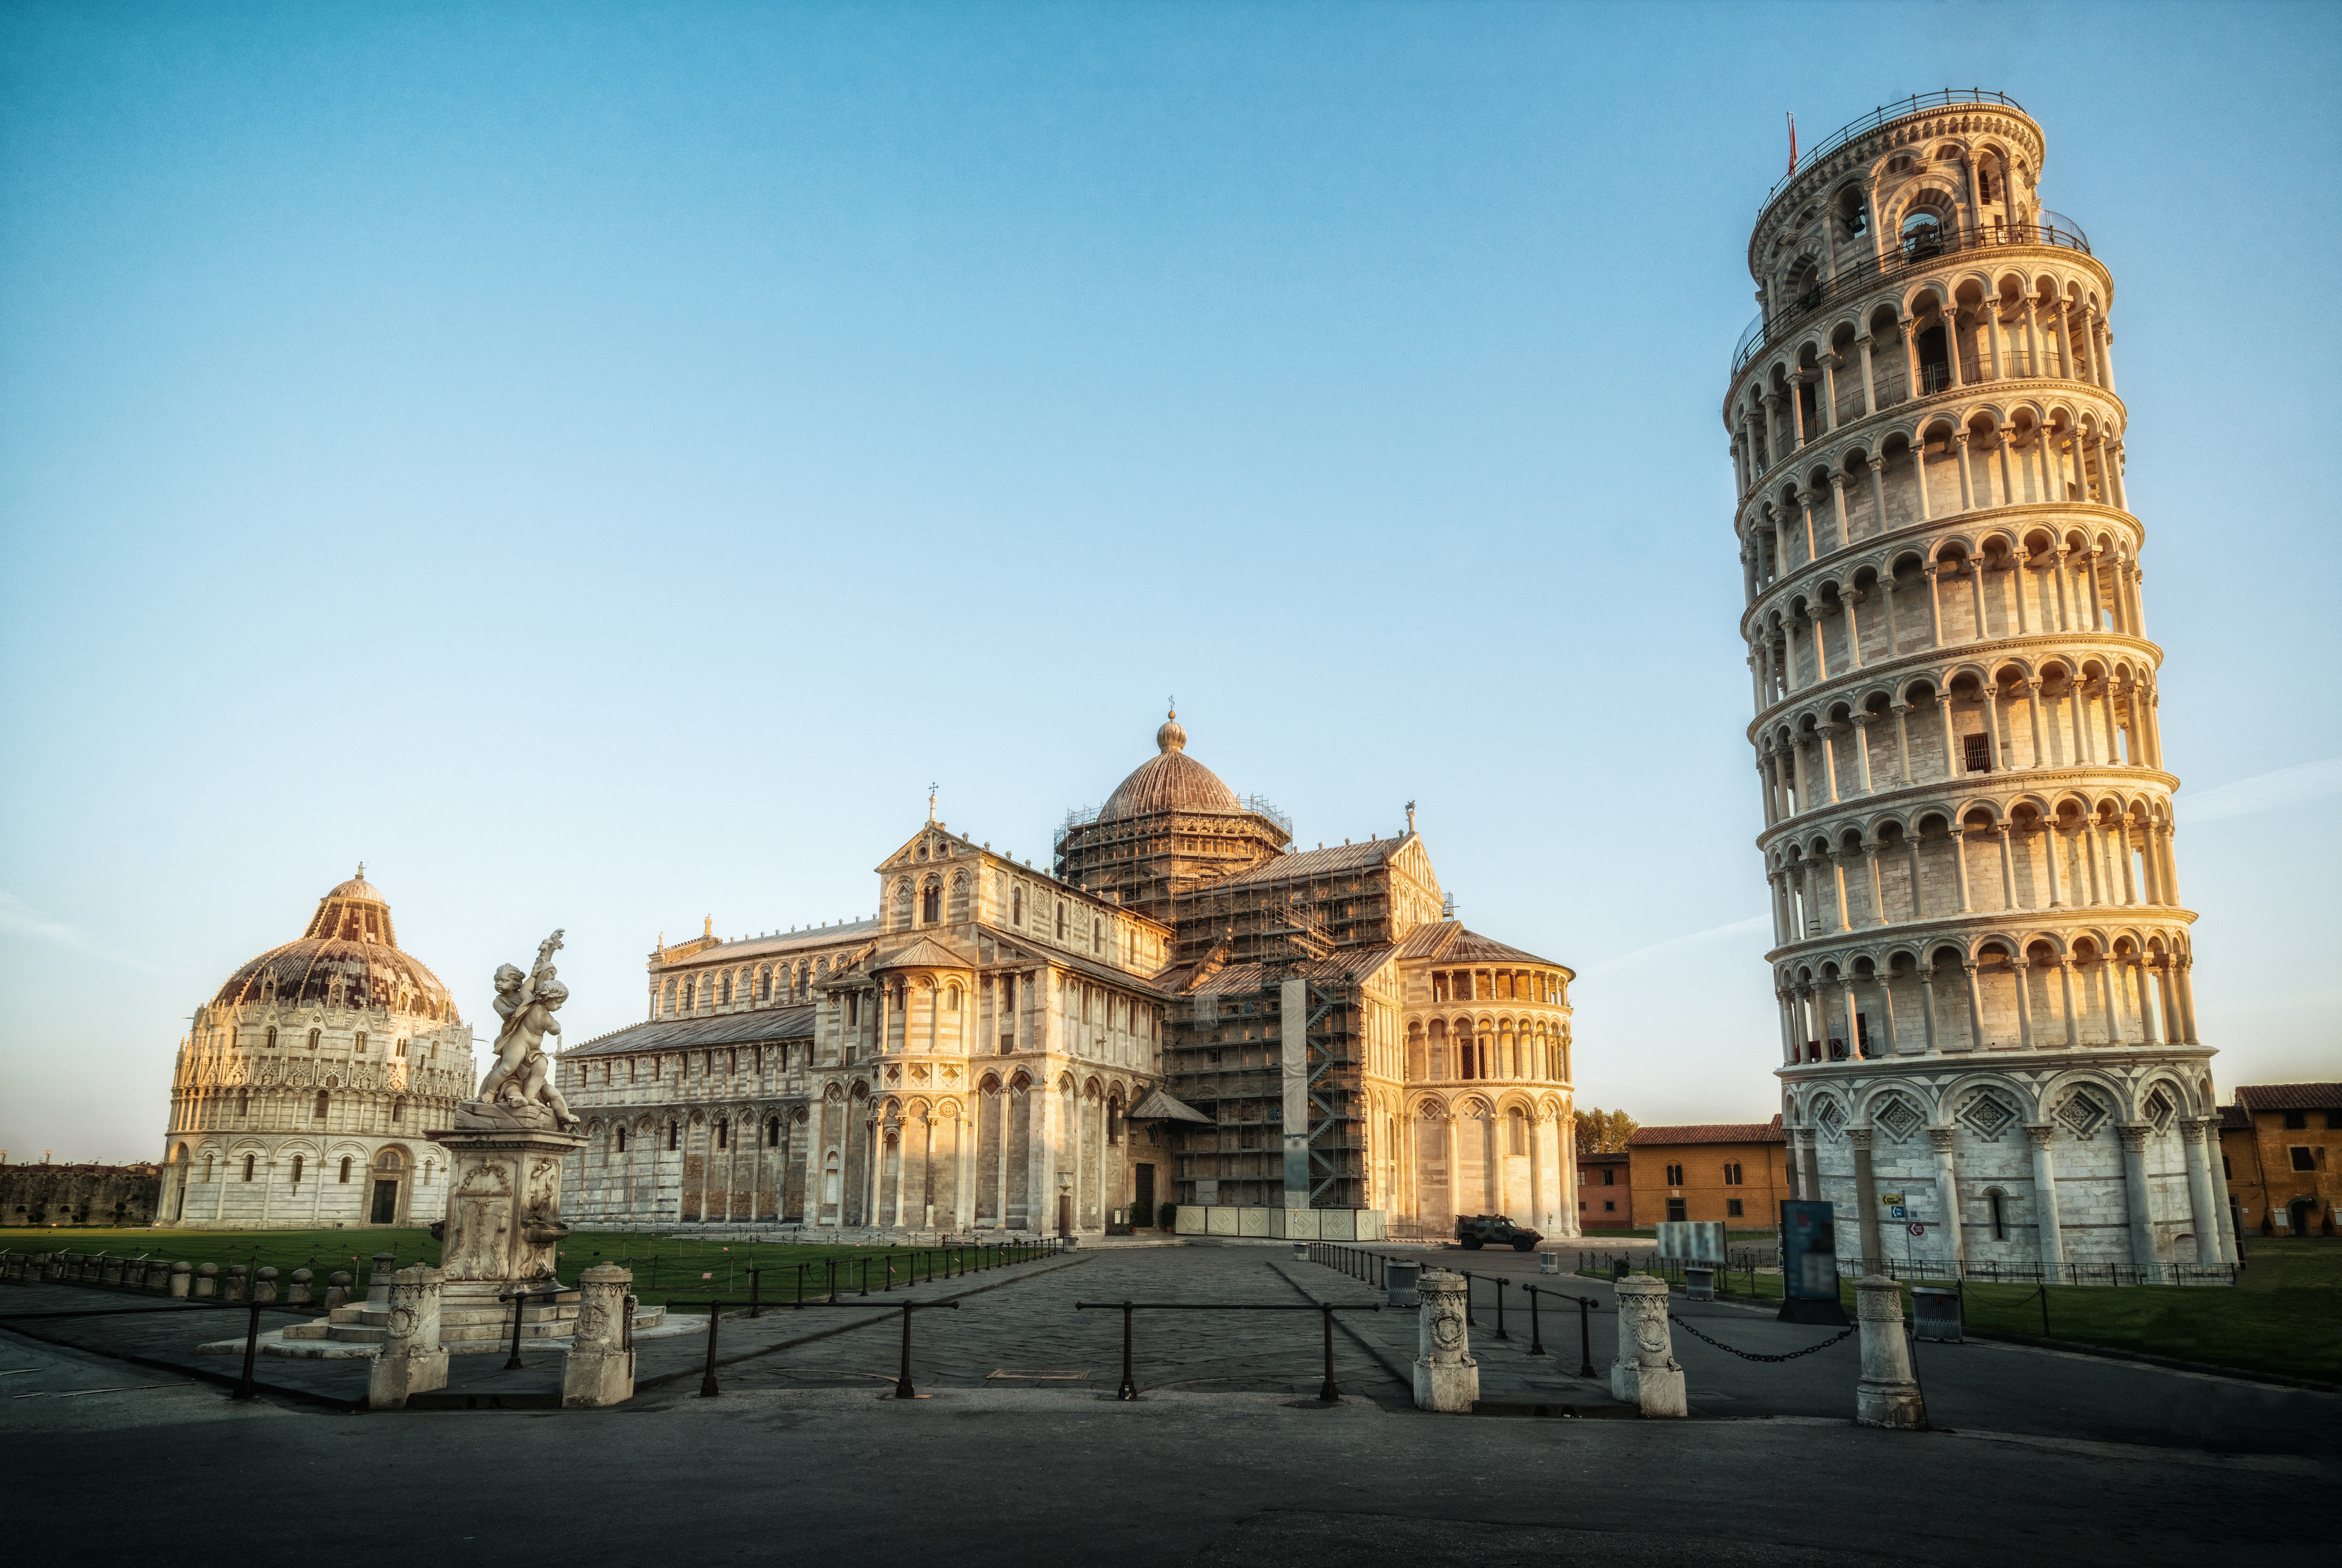 Leaning Tower of Pisa in Pisa, Italy.